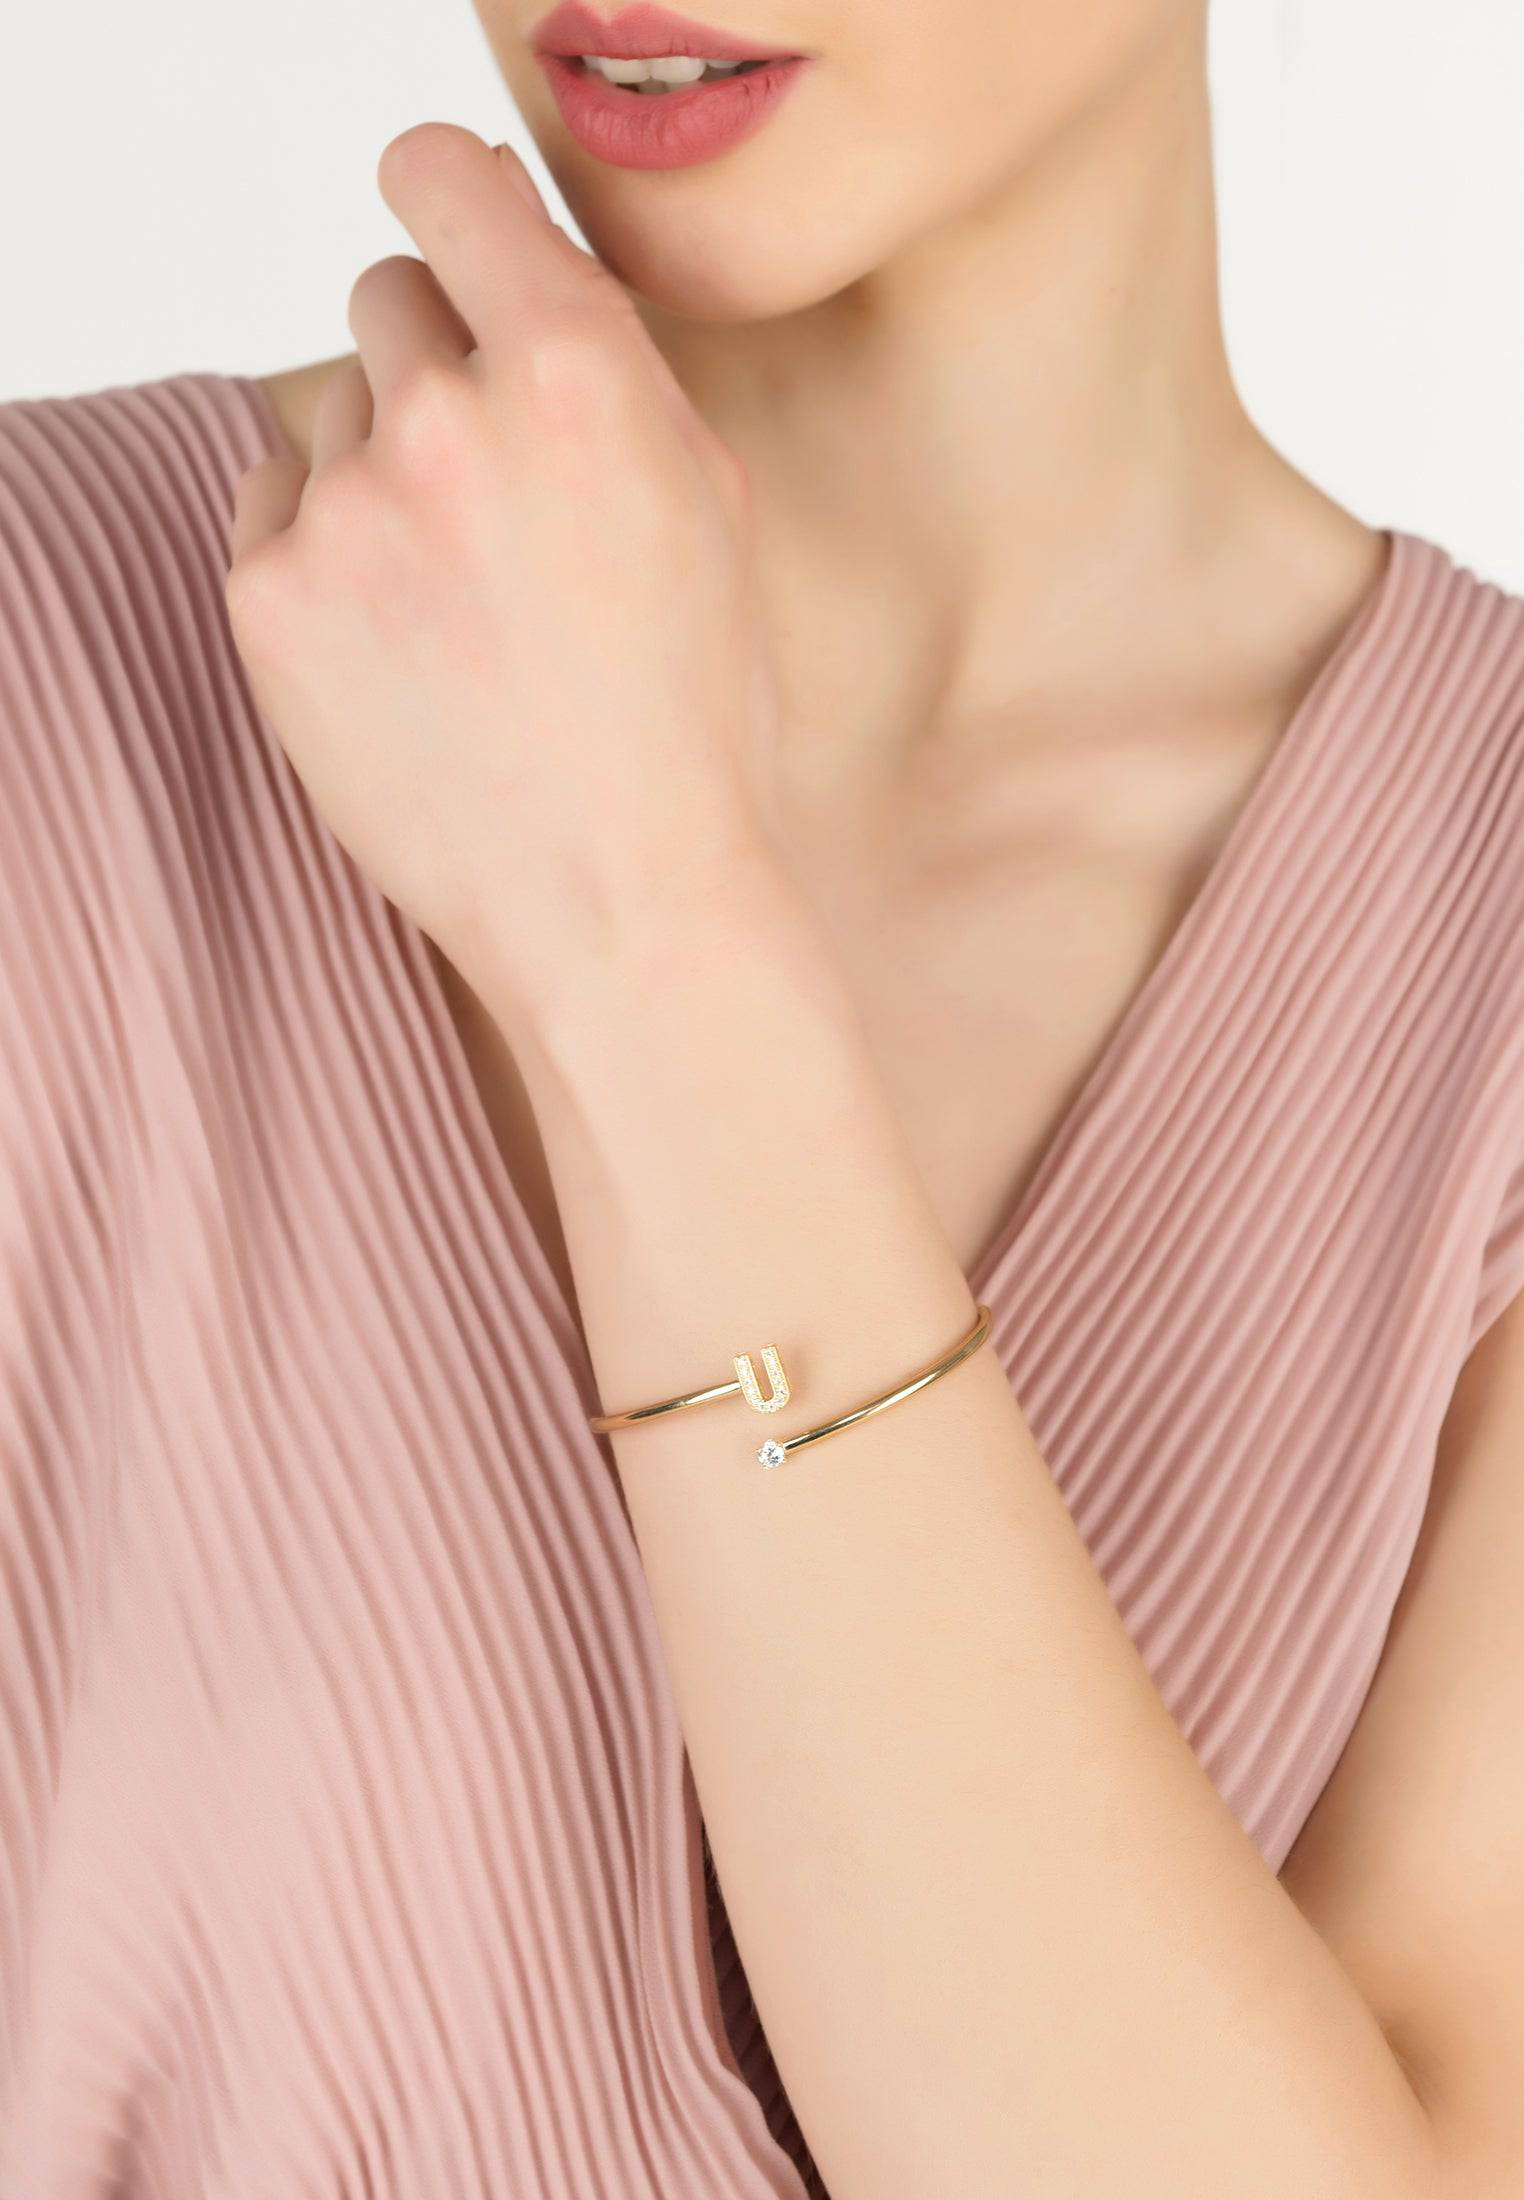 Gold Initial Bangle Bracelet with Zircon Monogram and Cubic Zirconia - Personalized Birthday Gift Idea Bijou Her